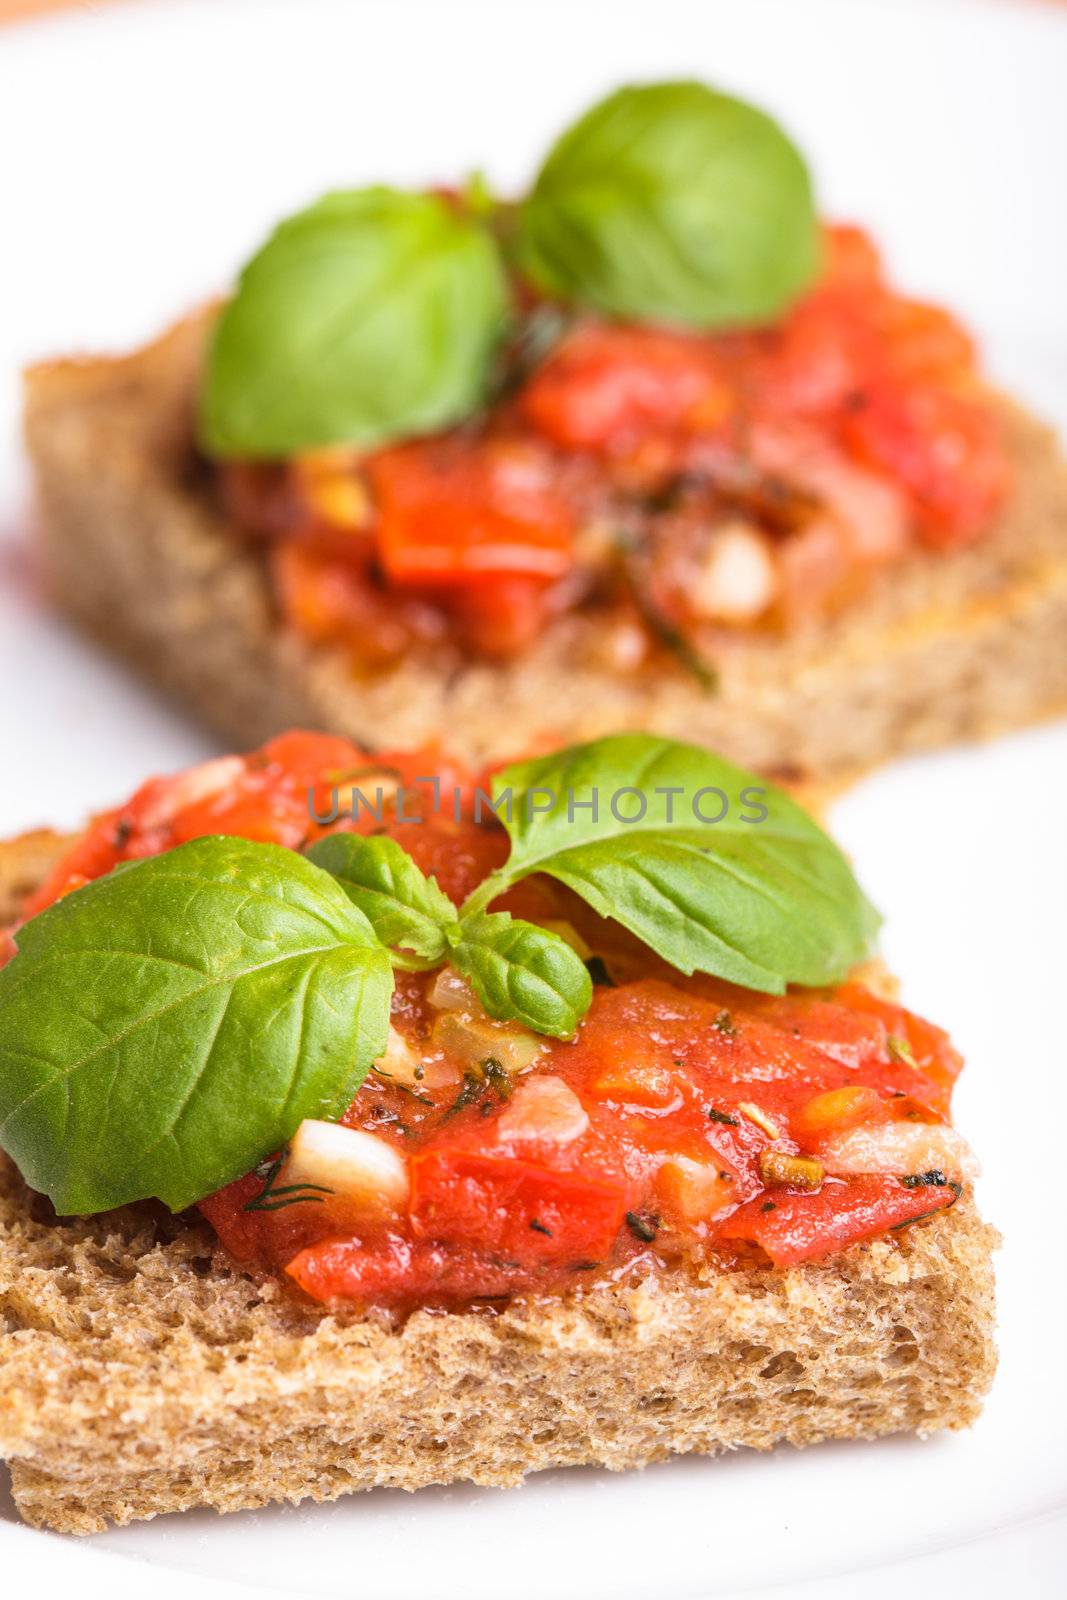 Crostini with tomato, garlic and basil. National italian dish